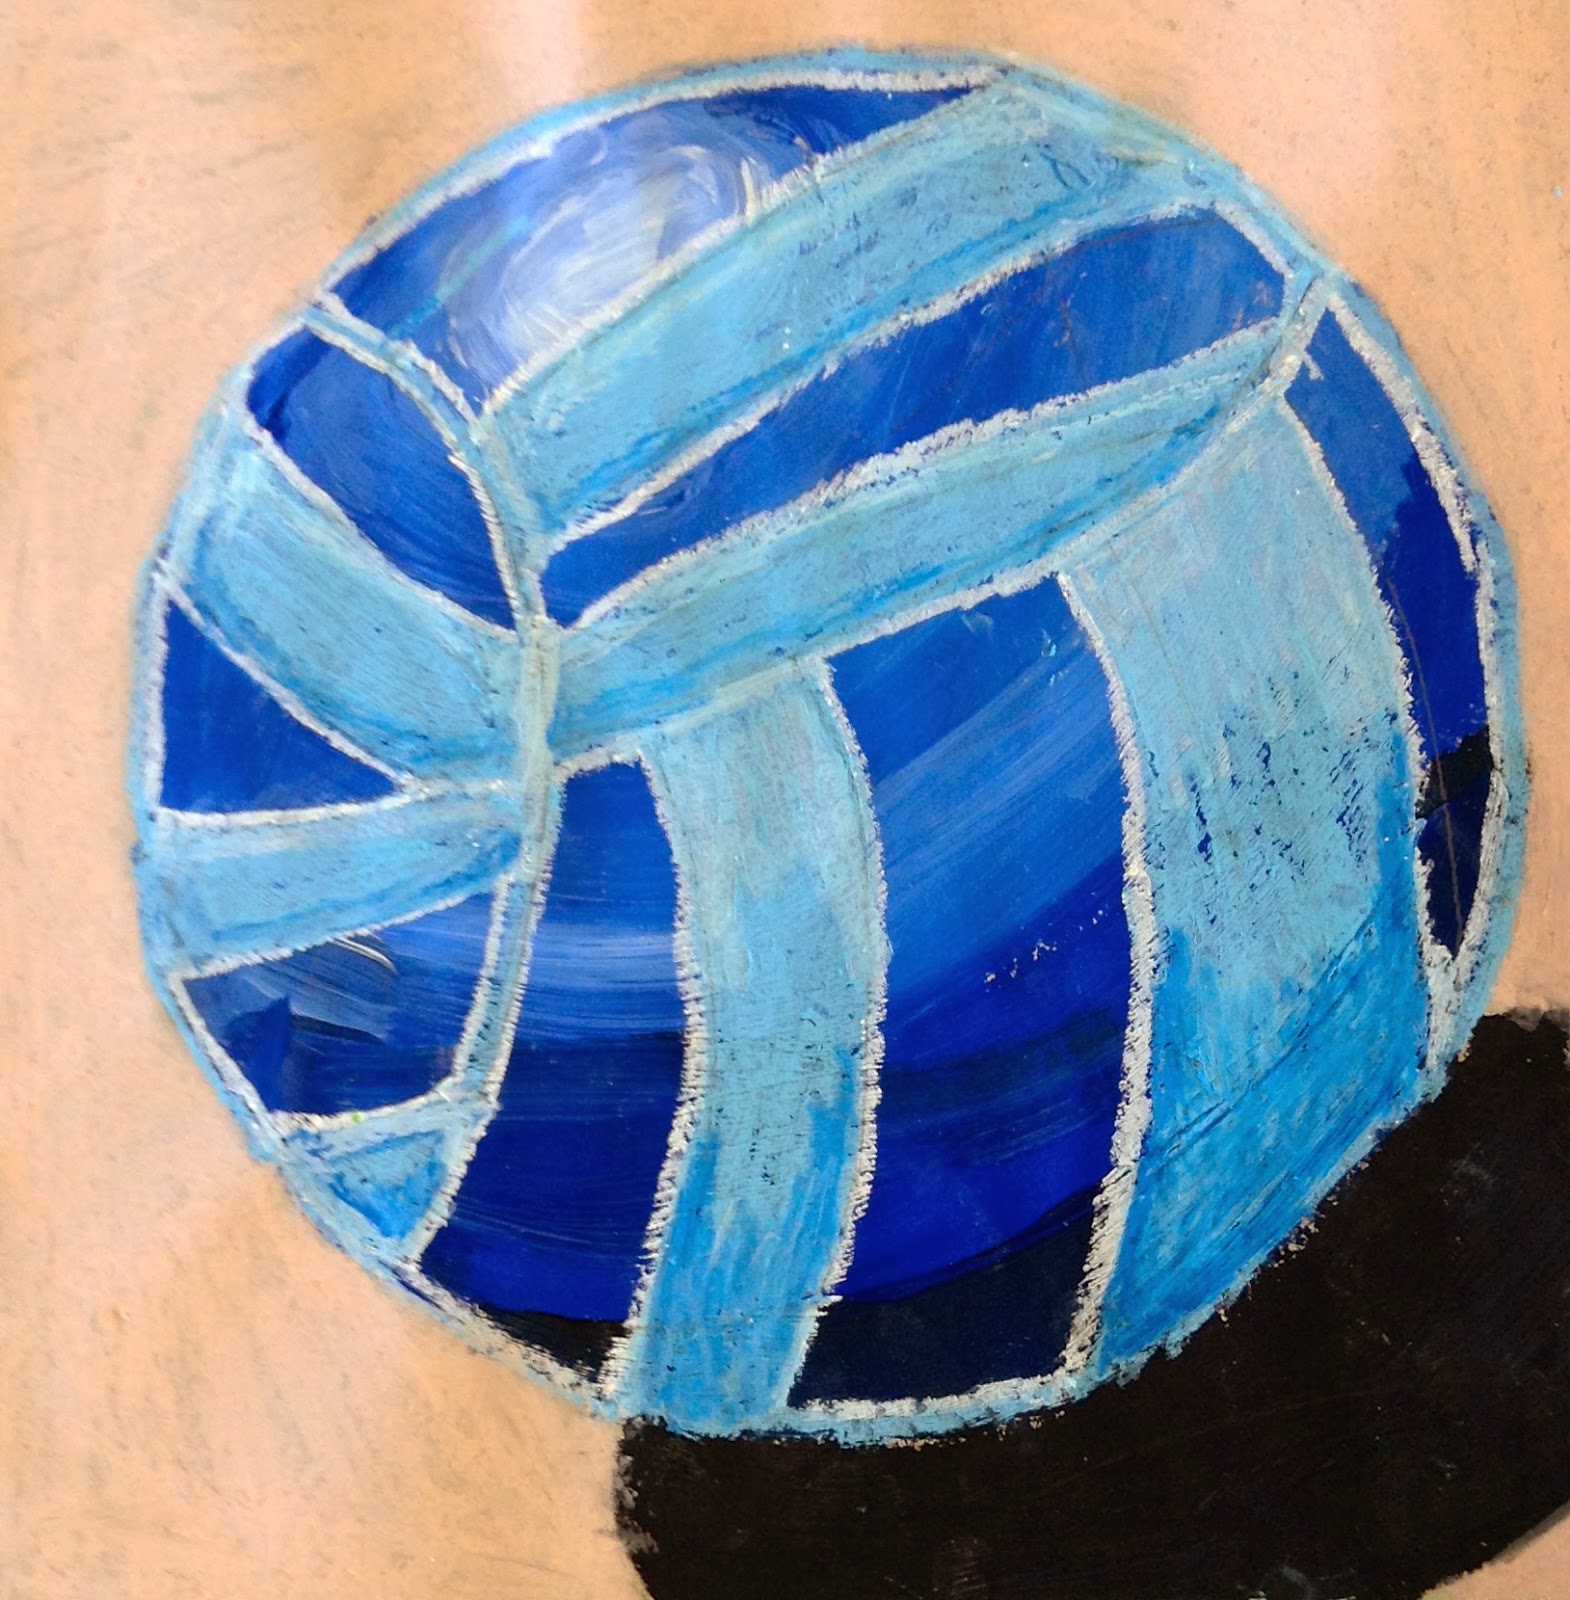 Art. Eat. Tie Dye. Repeat.: 6th Grade Sports Spheres